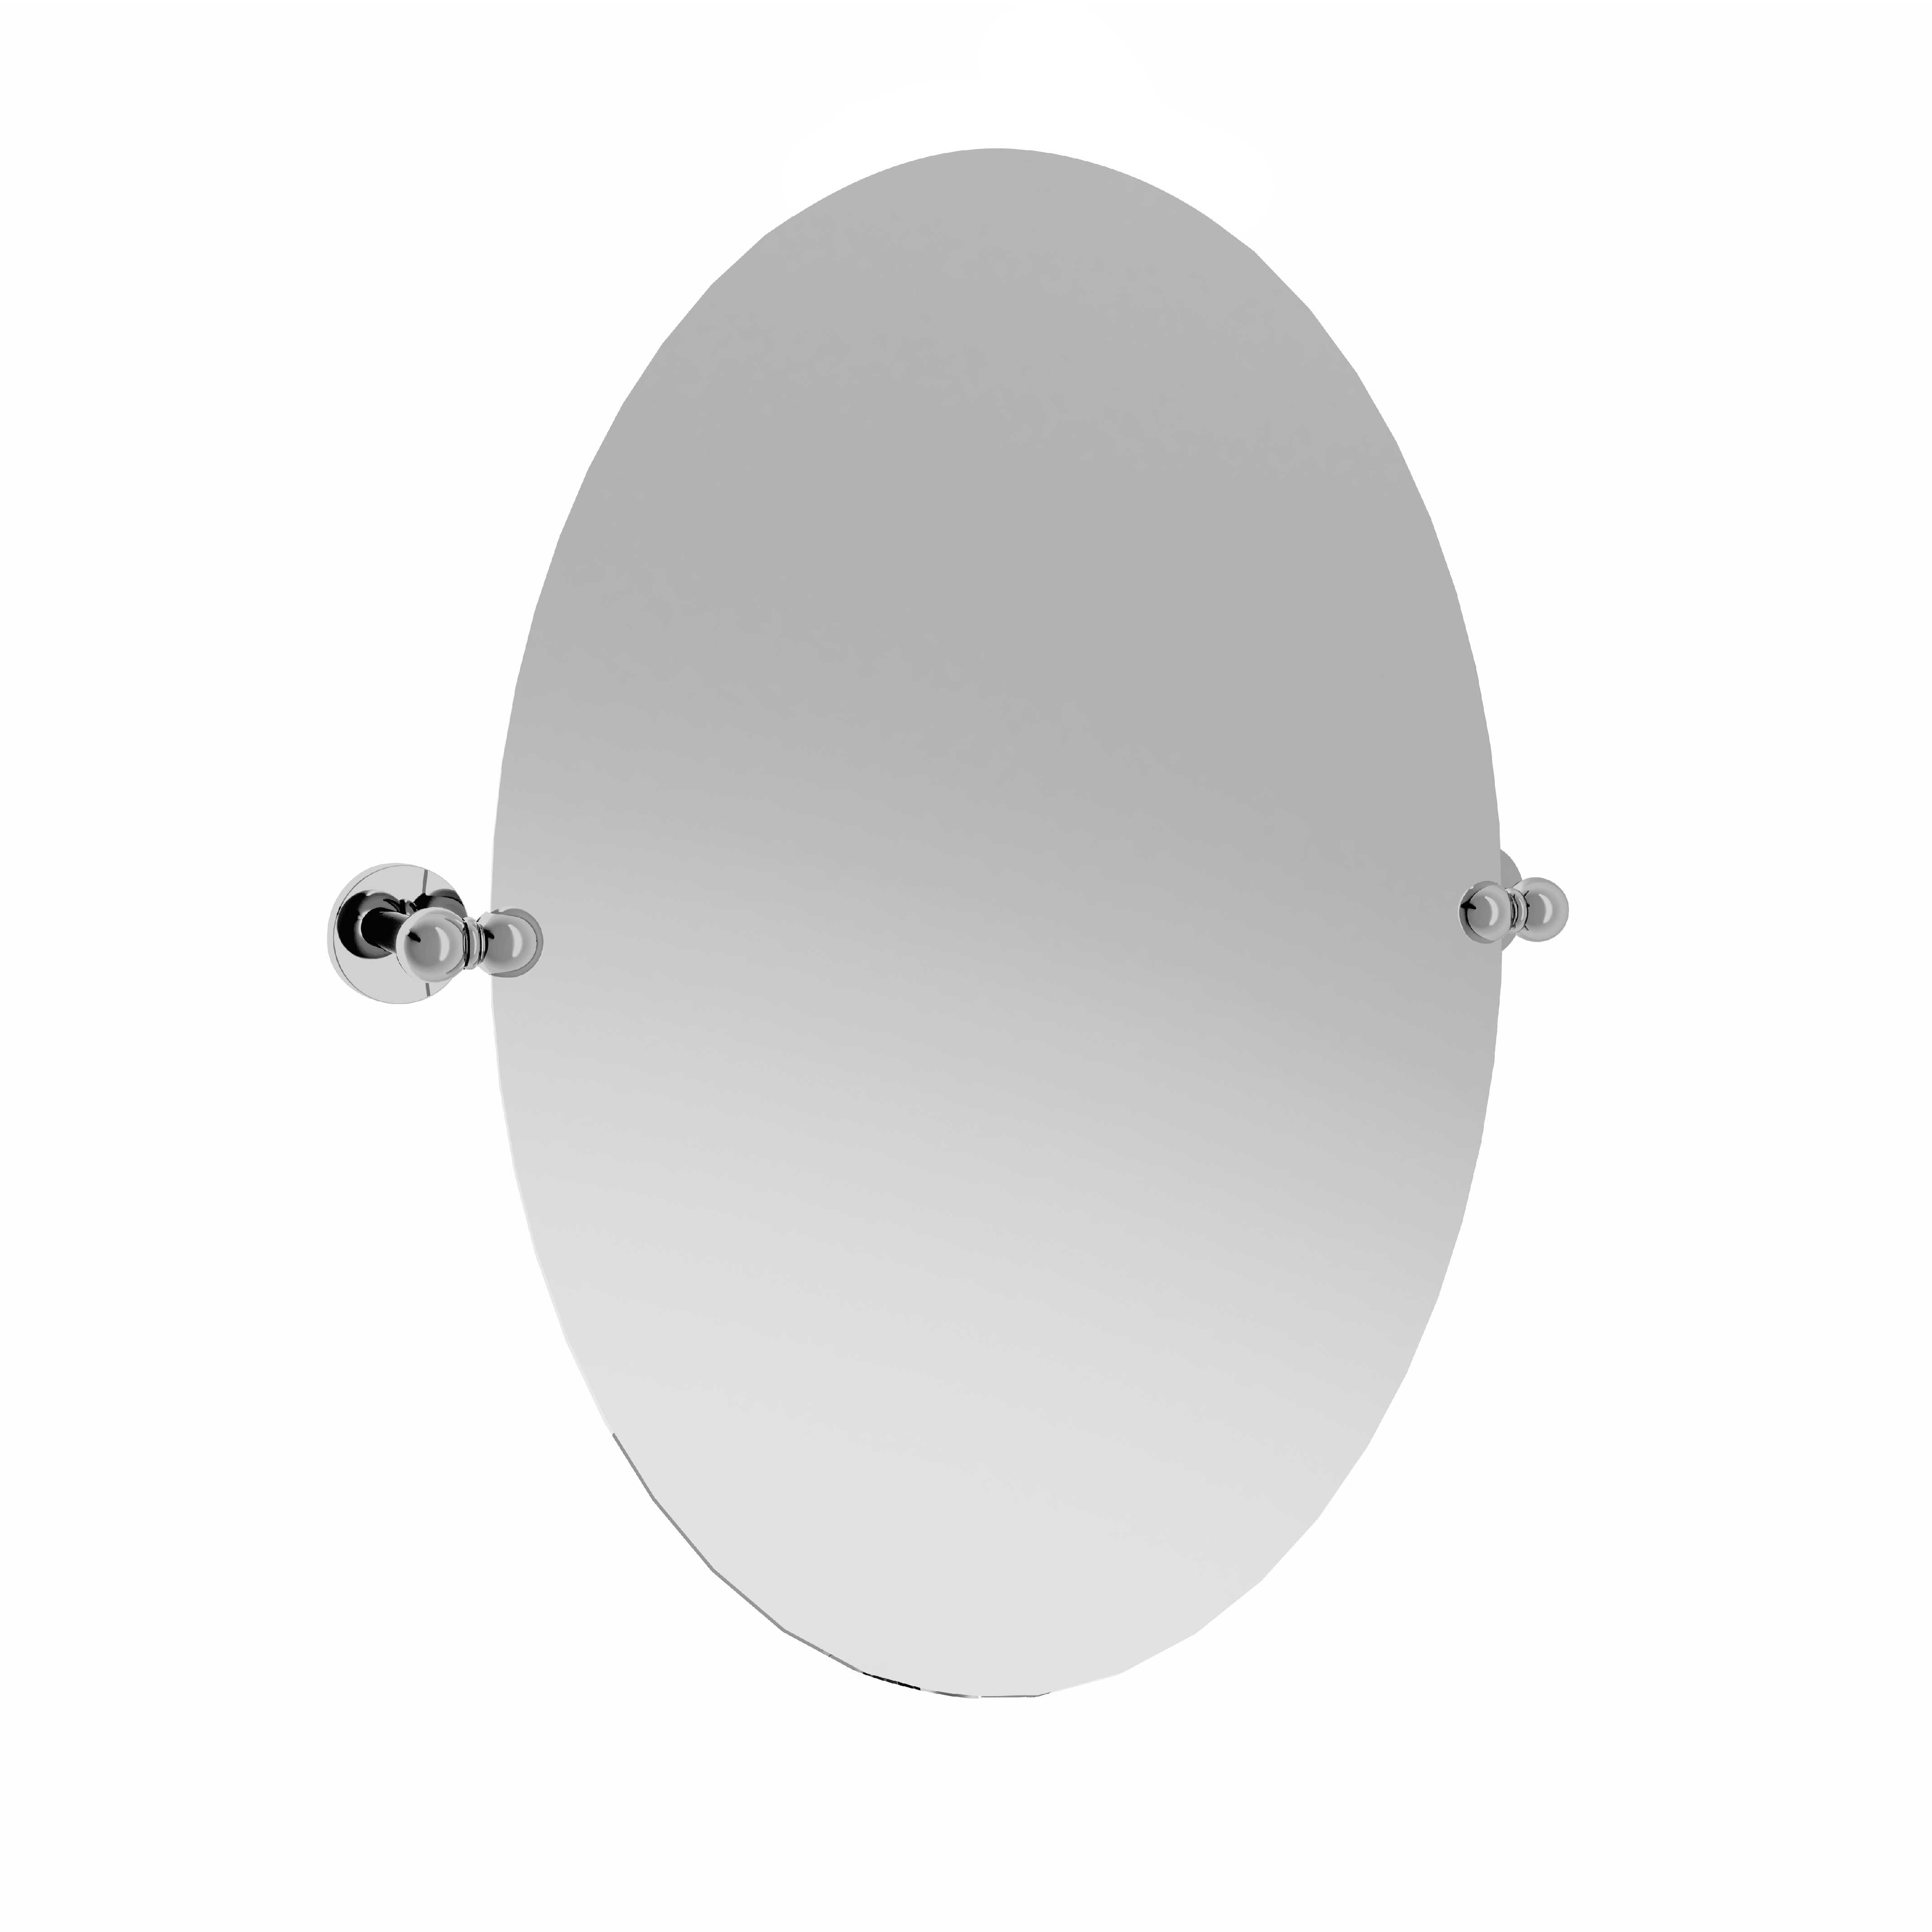 M91-537 Oval mirror